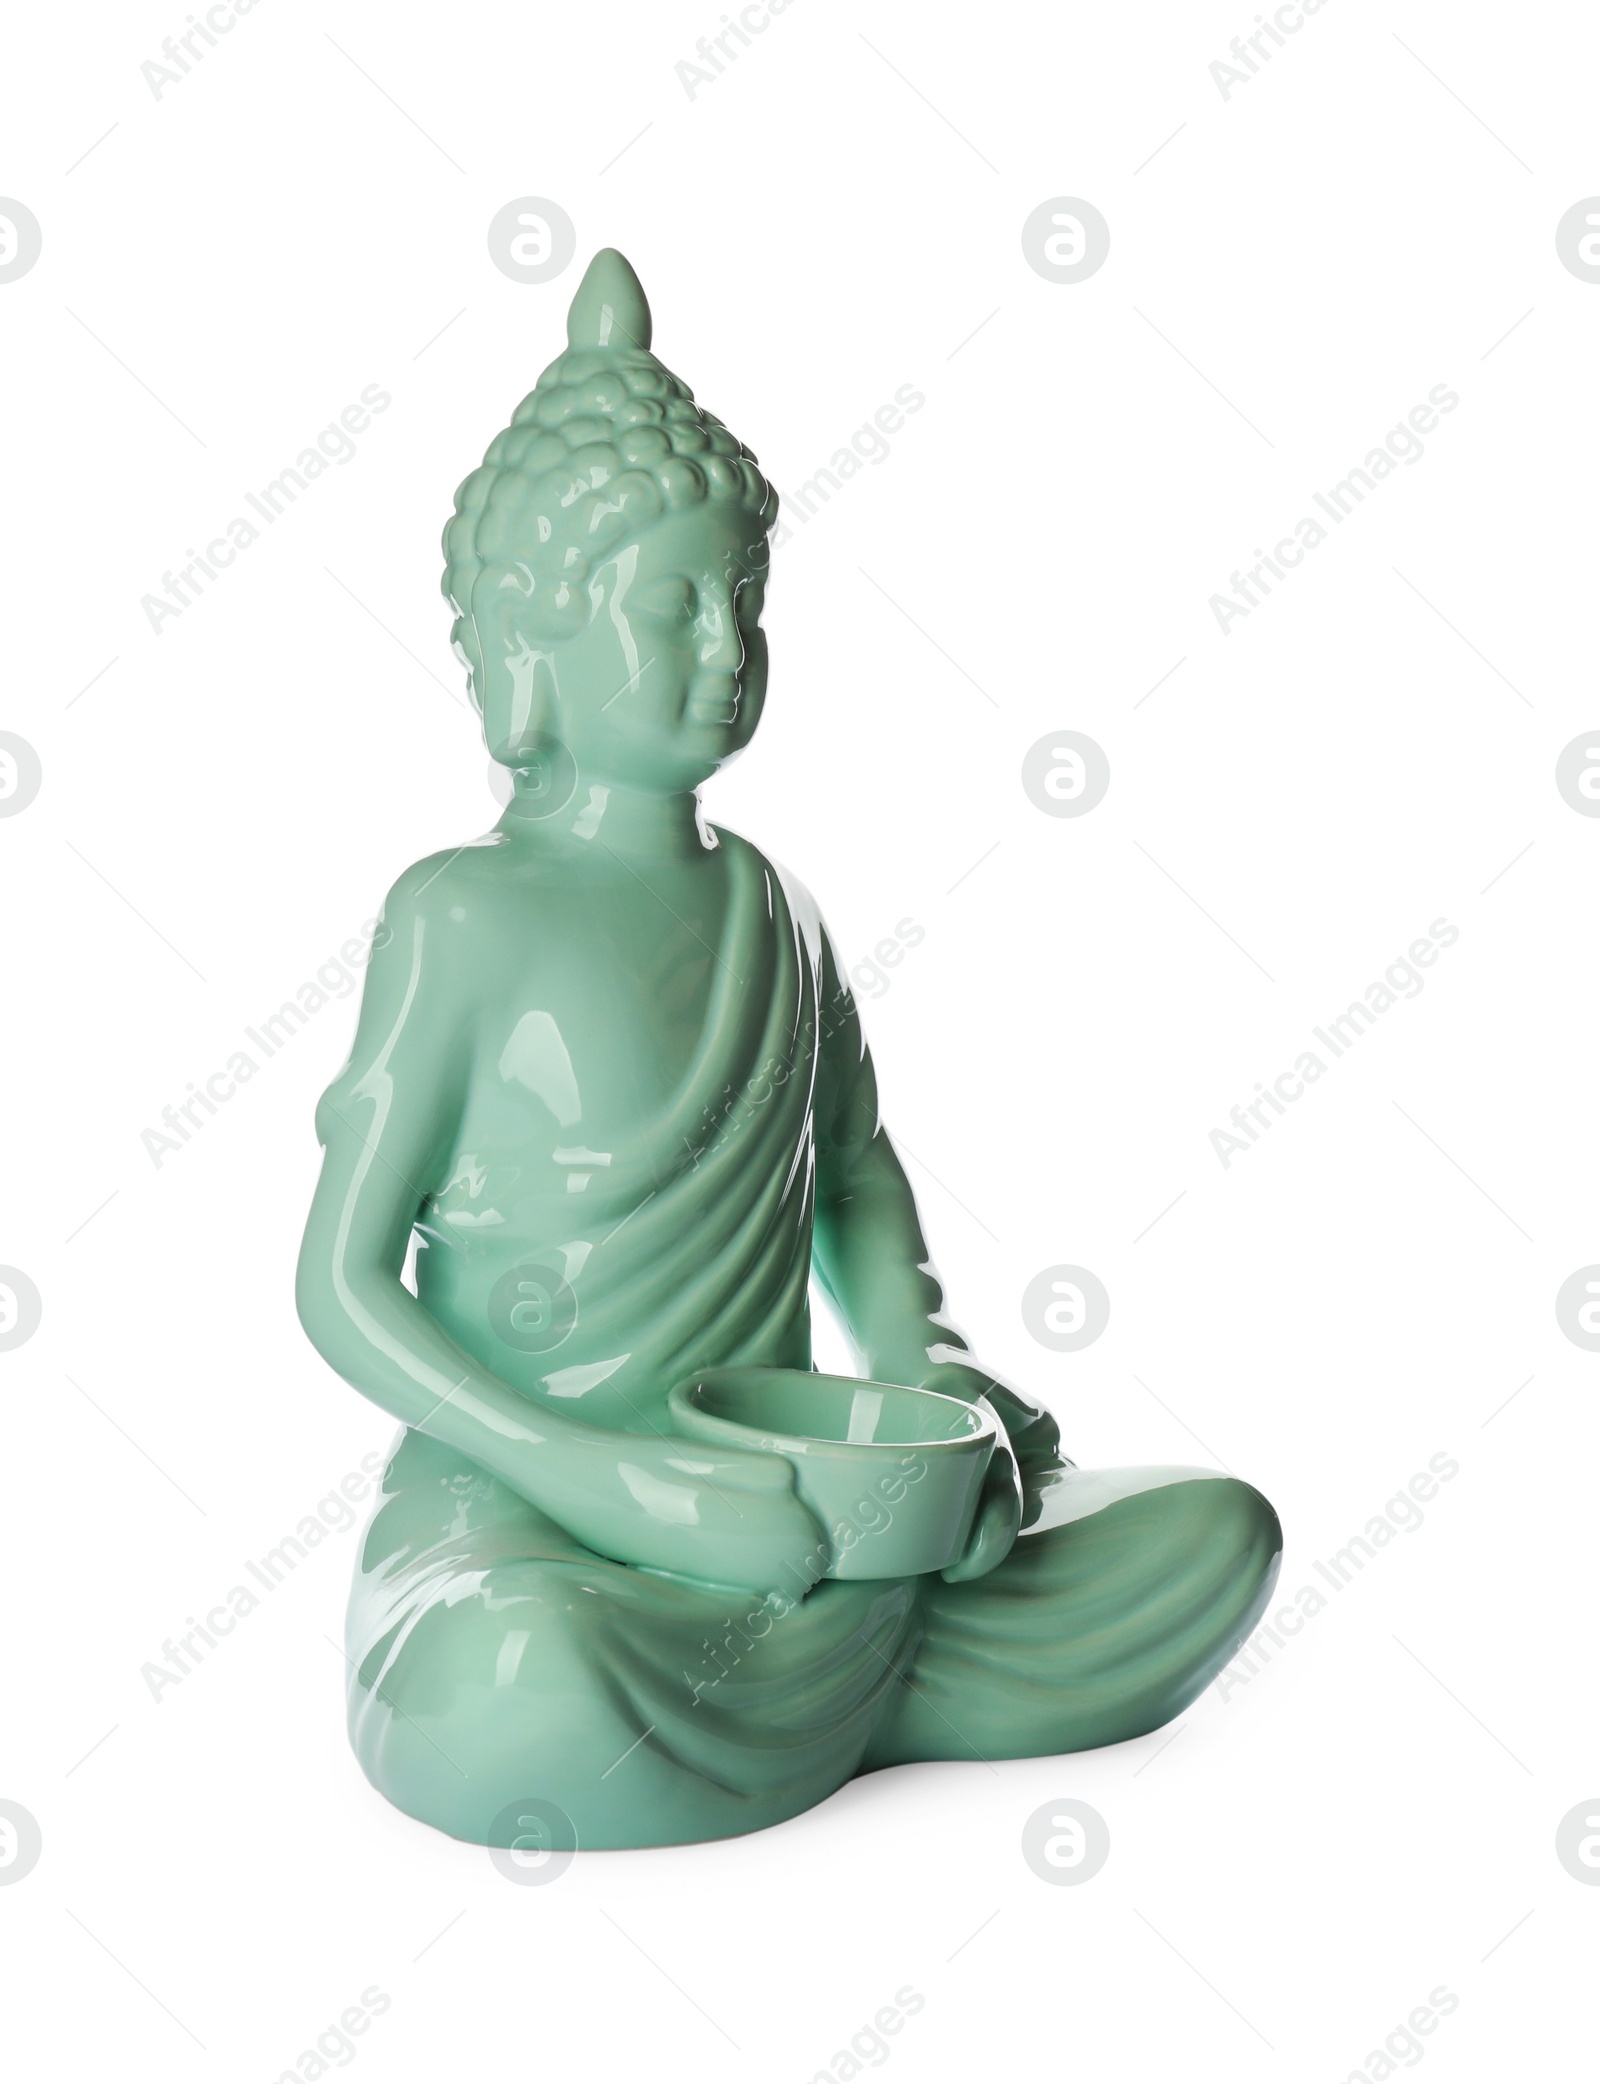 Photo of Beautiful ceramic Buddha sculpture isolated on white